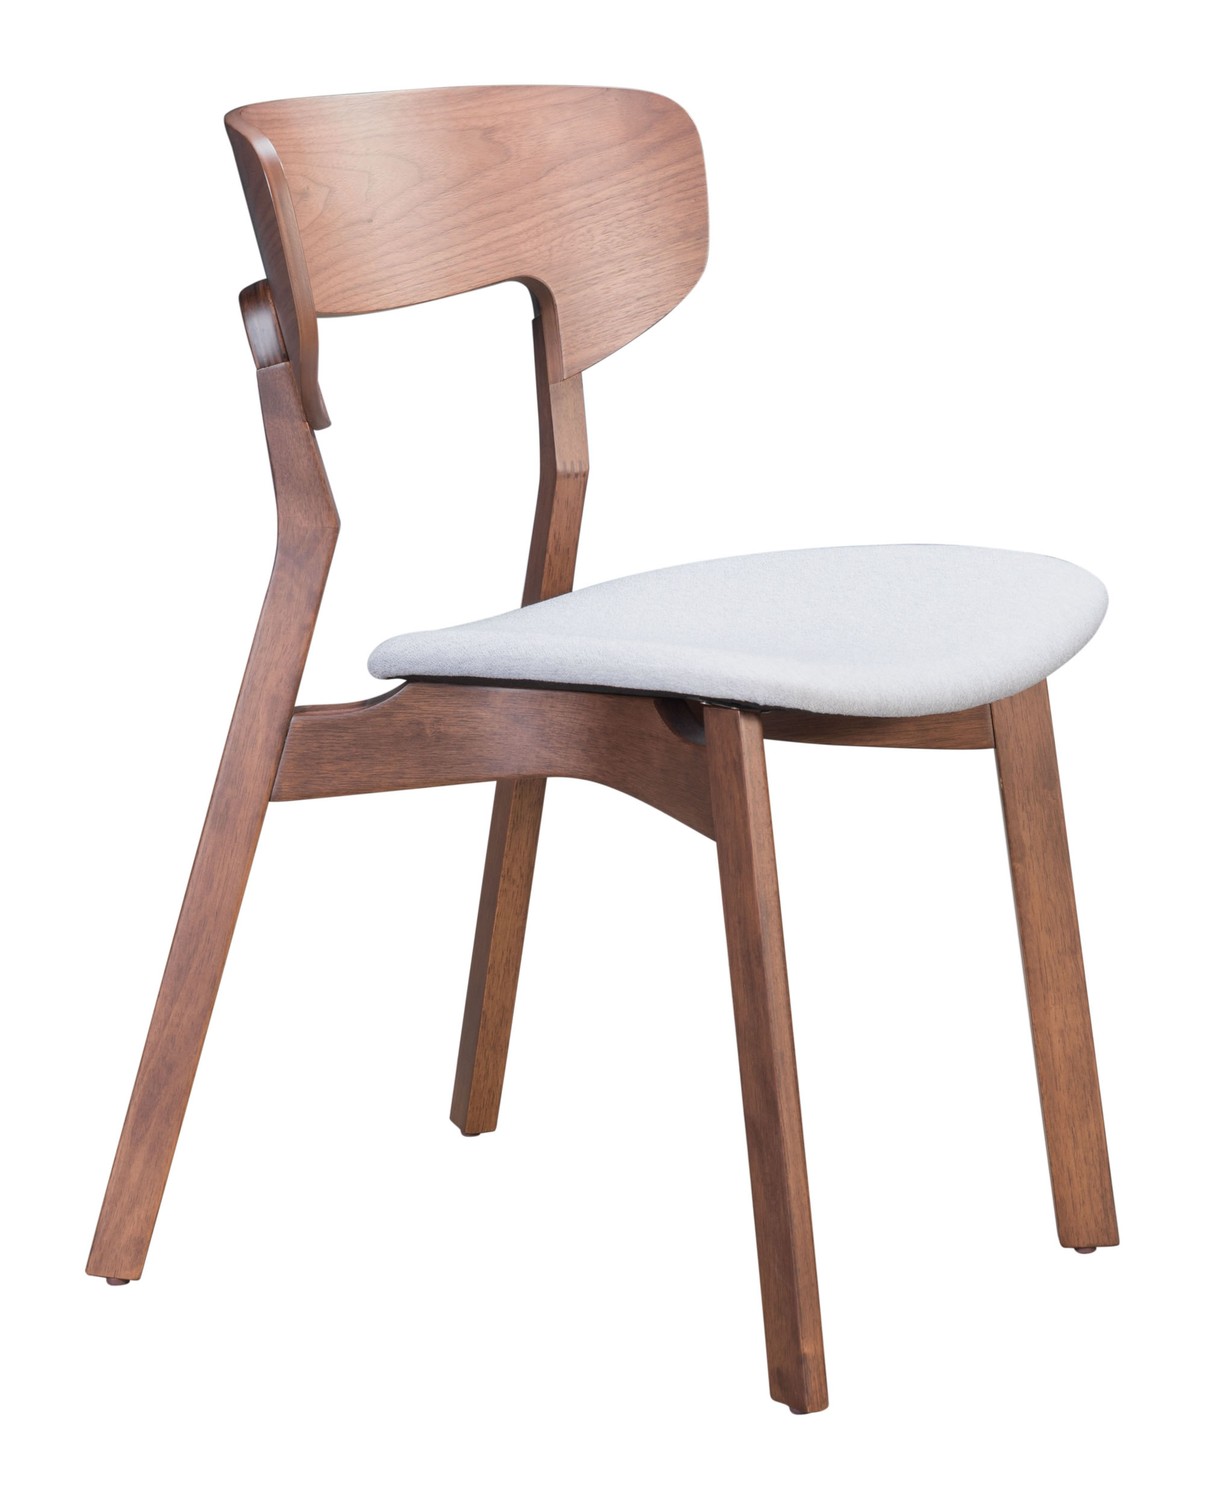 20.1" x 22" x 30.5" Walnut & Light Gray, Rubberwood, Dining Chair - Set of 2